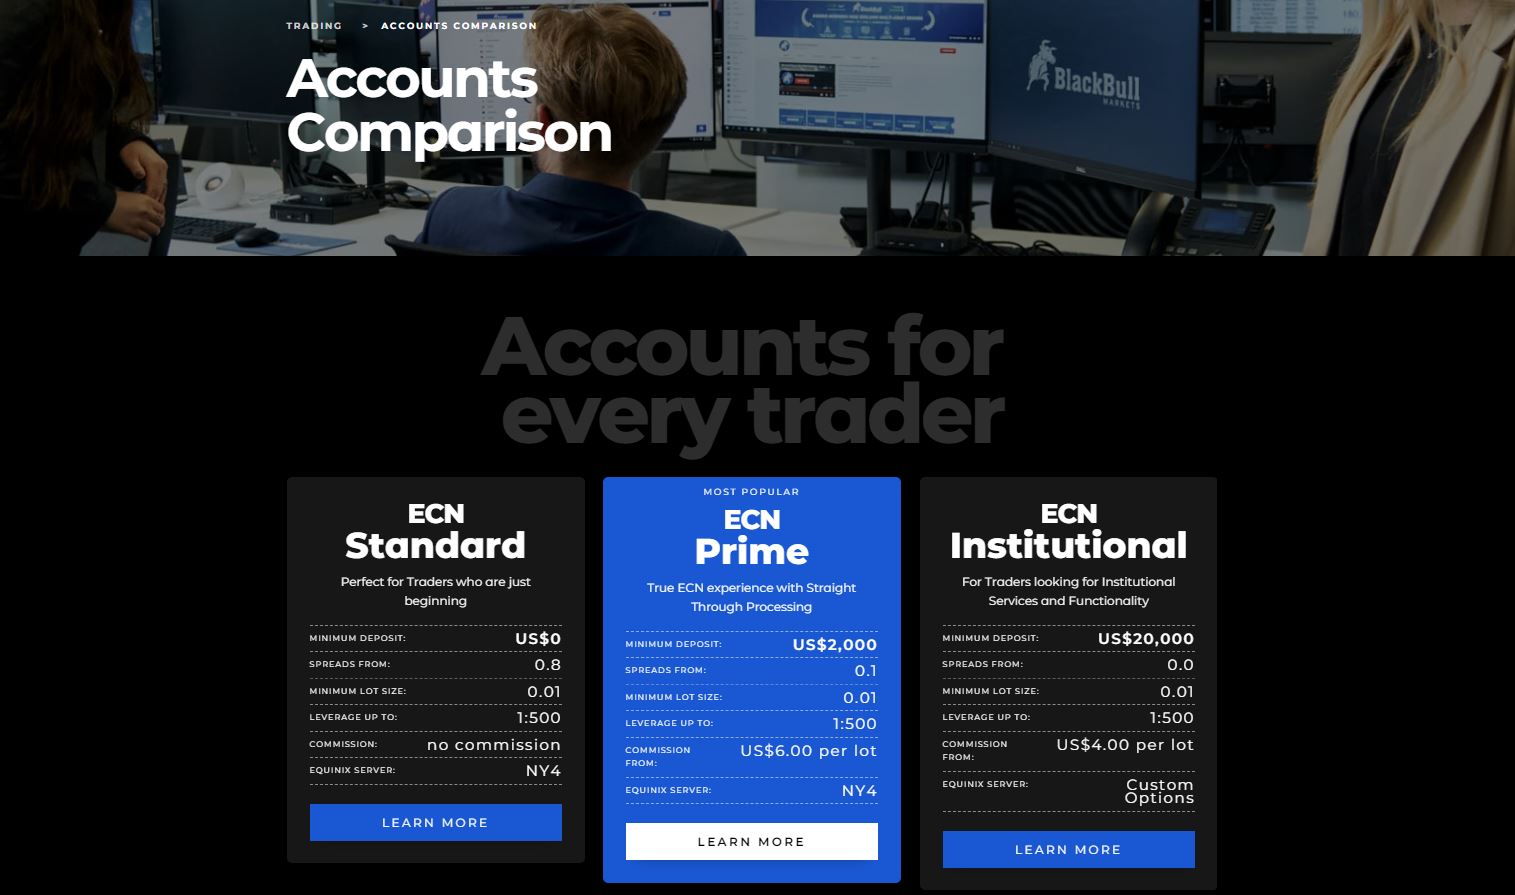 BlackBull Markets customized trading account types